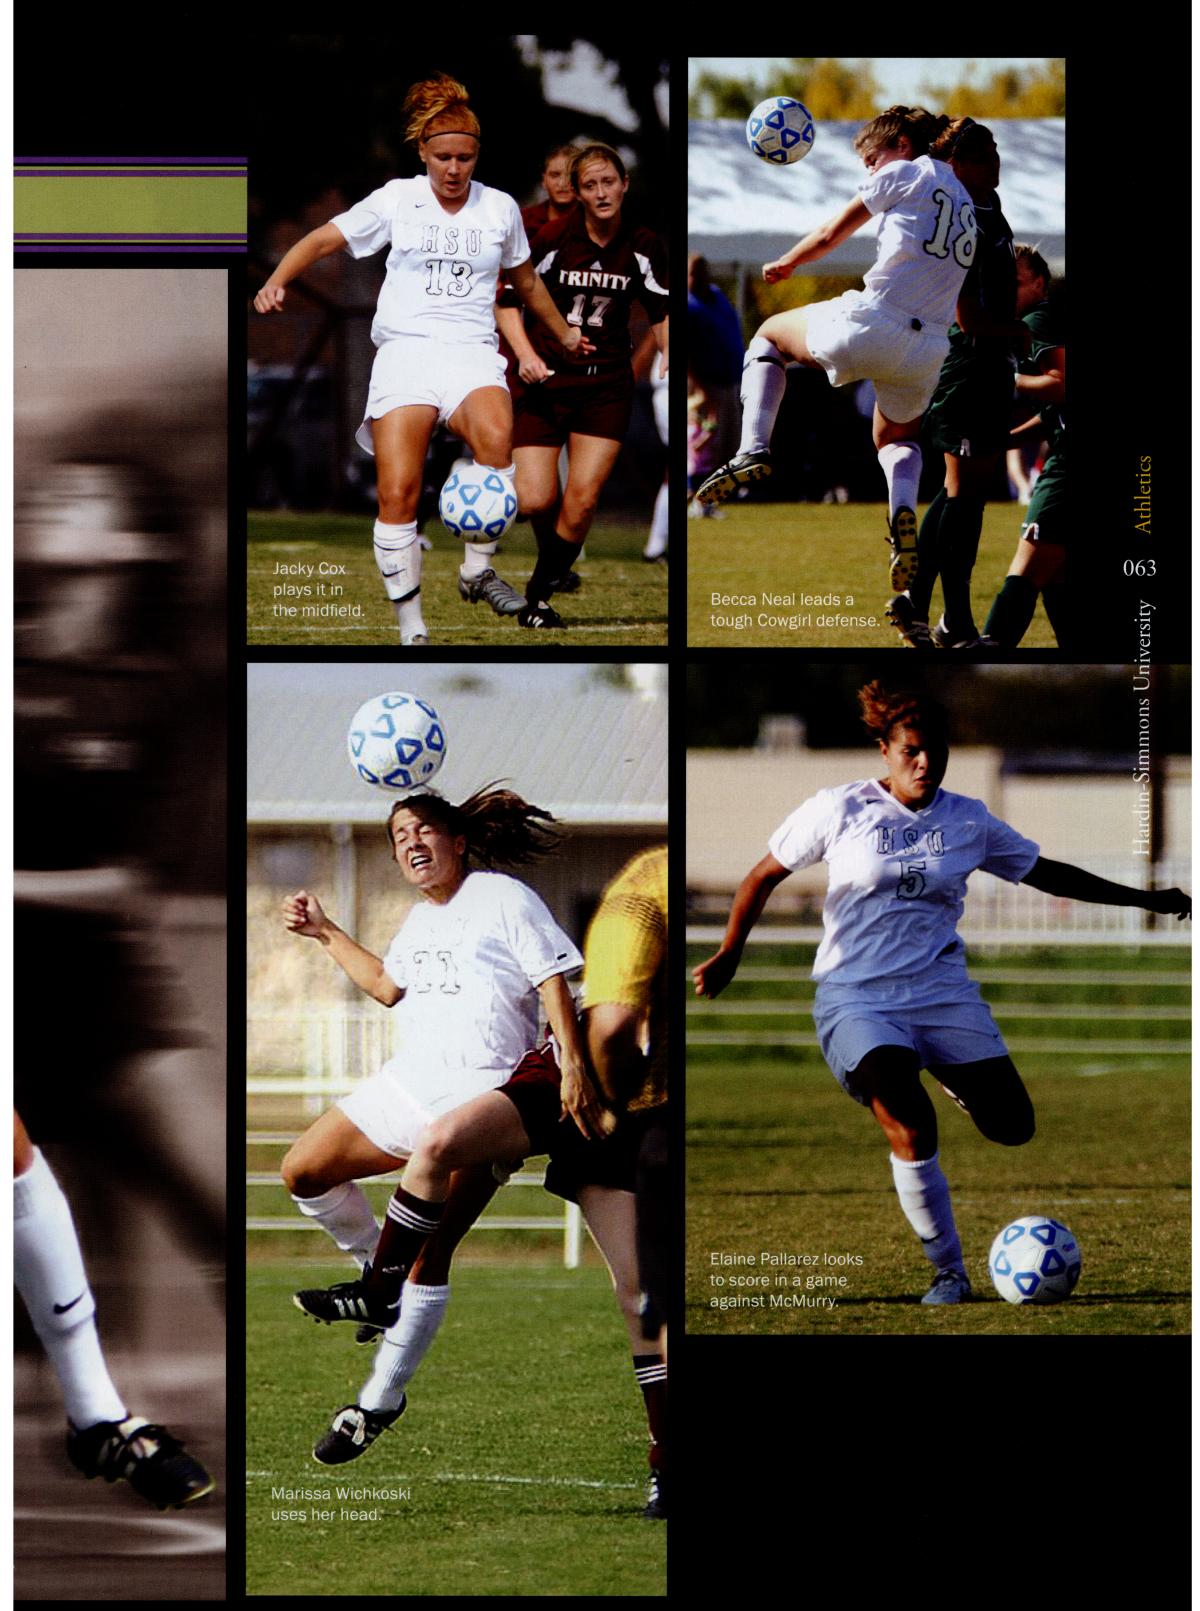 The Bronco, Yearbook of Hardin-Simmons University, 2006
                                                
                                                    63
                                                